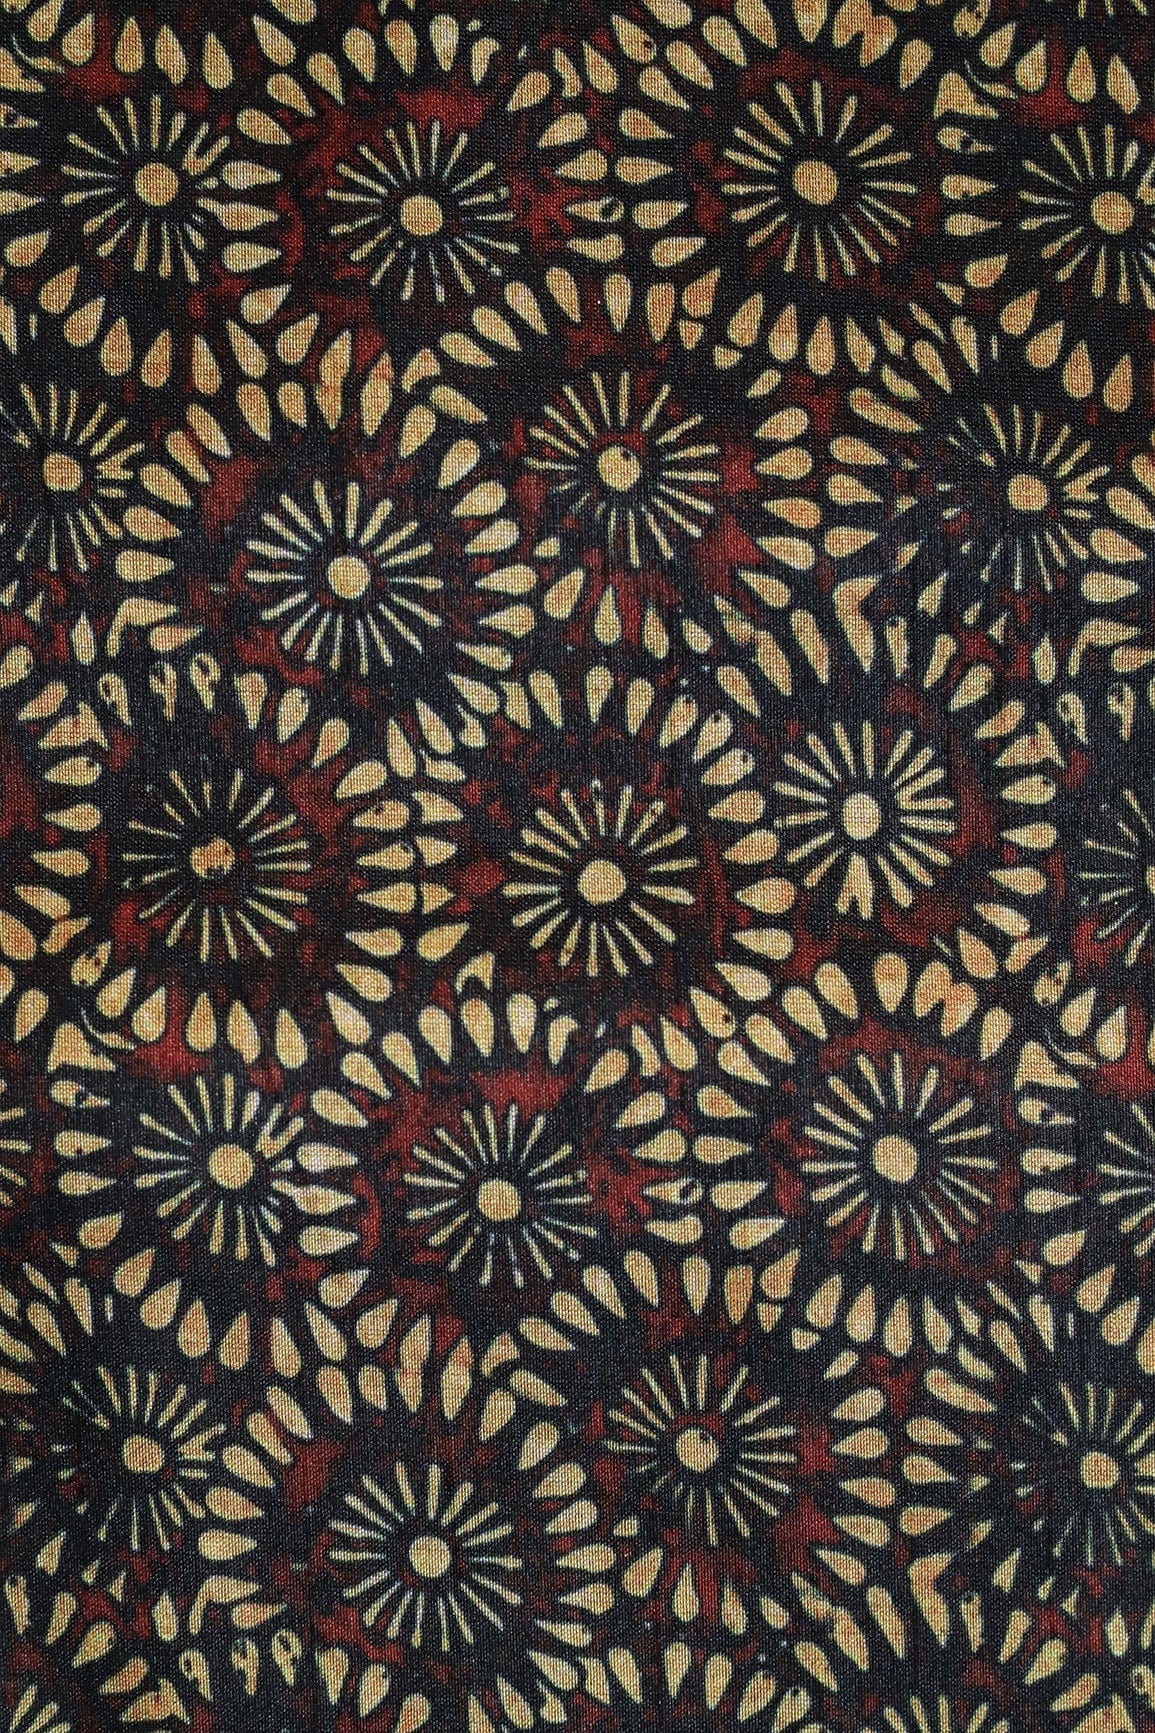 doeraa Prints Yellow And Black Geometric Pattern Digital Print On Mulberry Silk Fabric